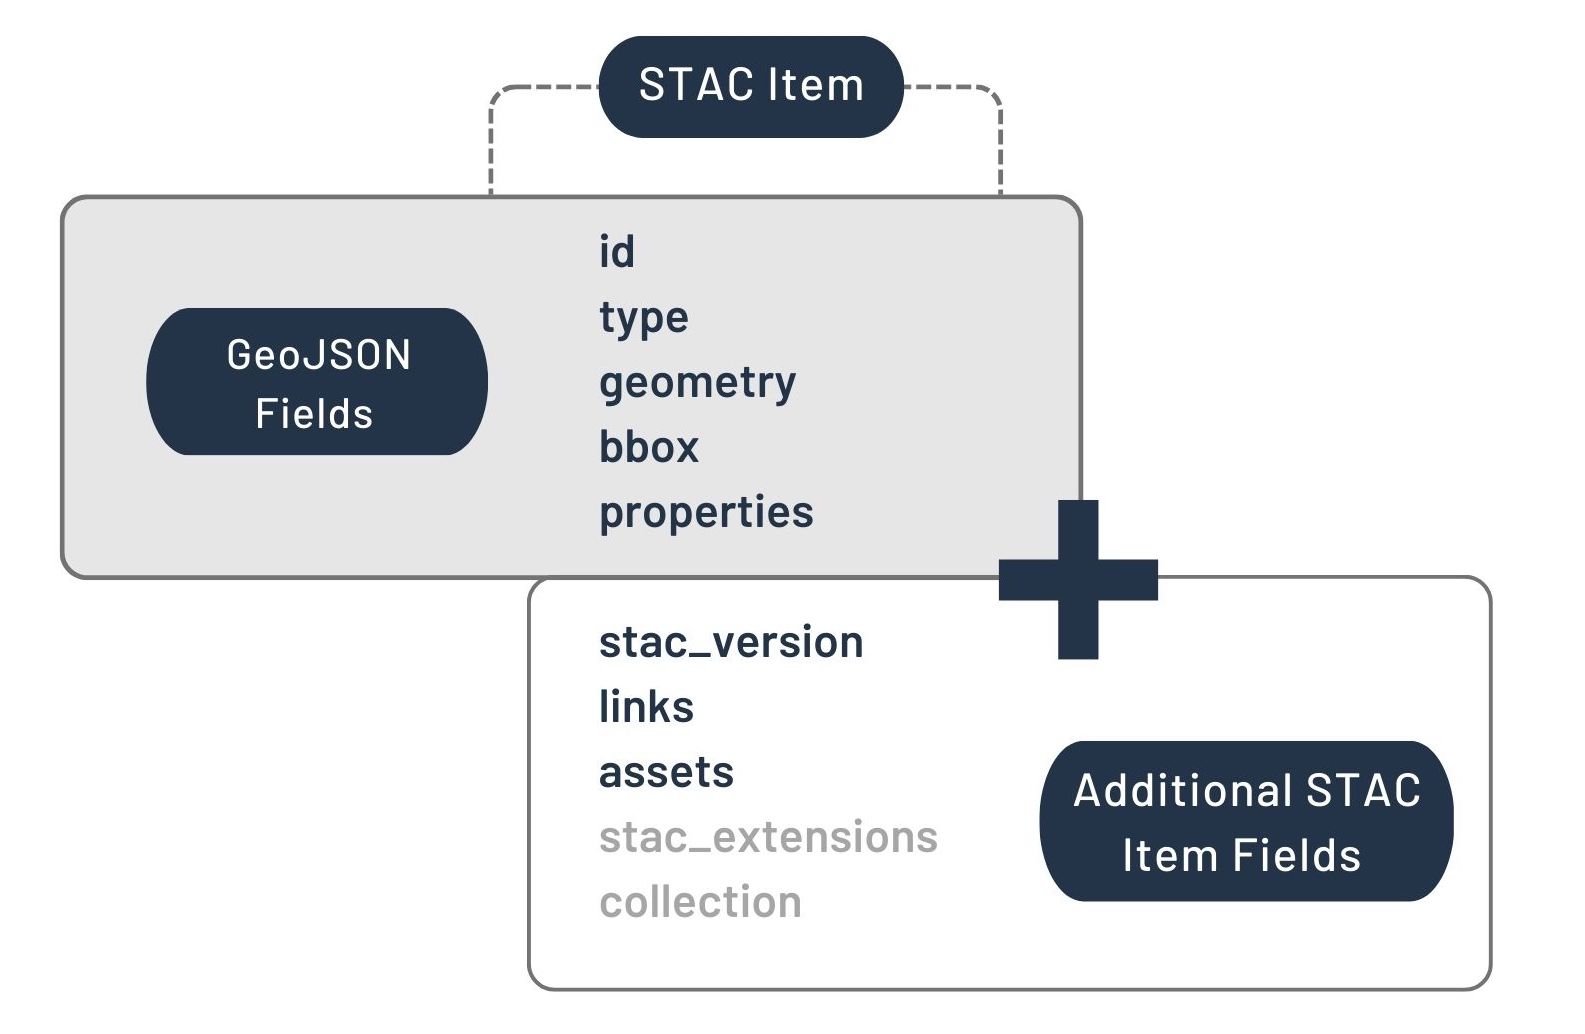 STAC Item Specification